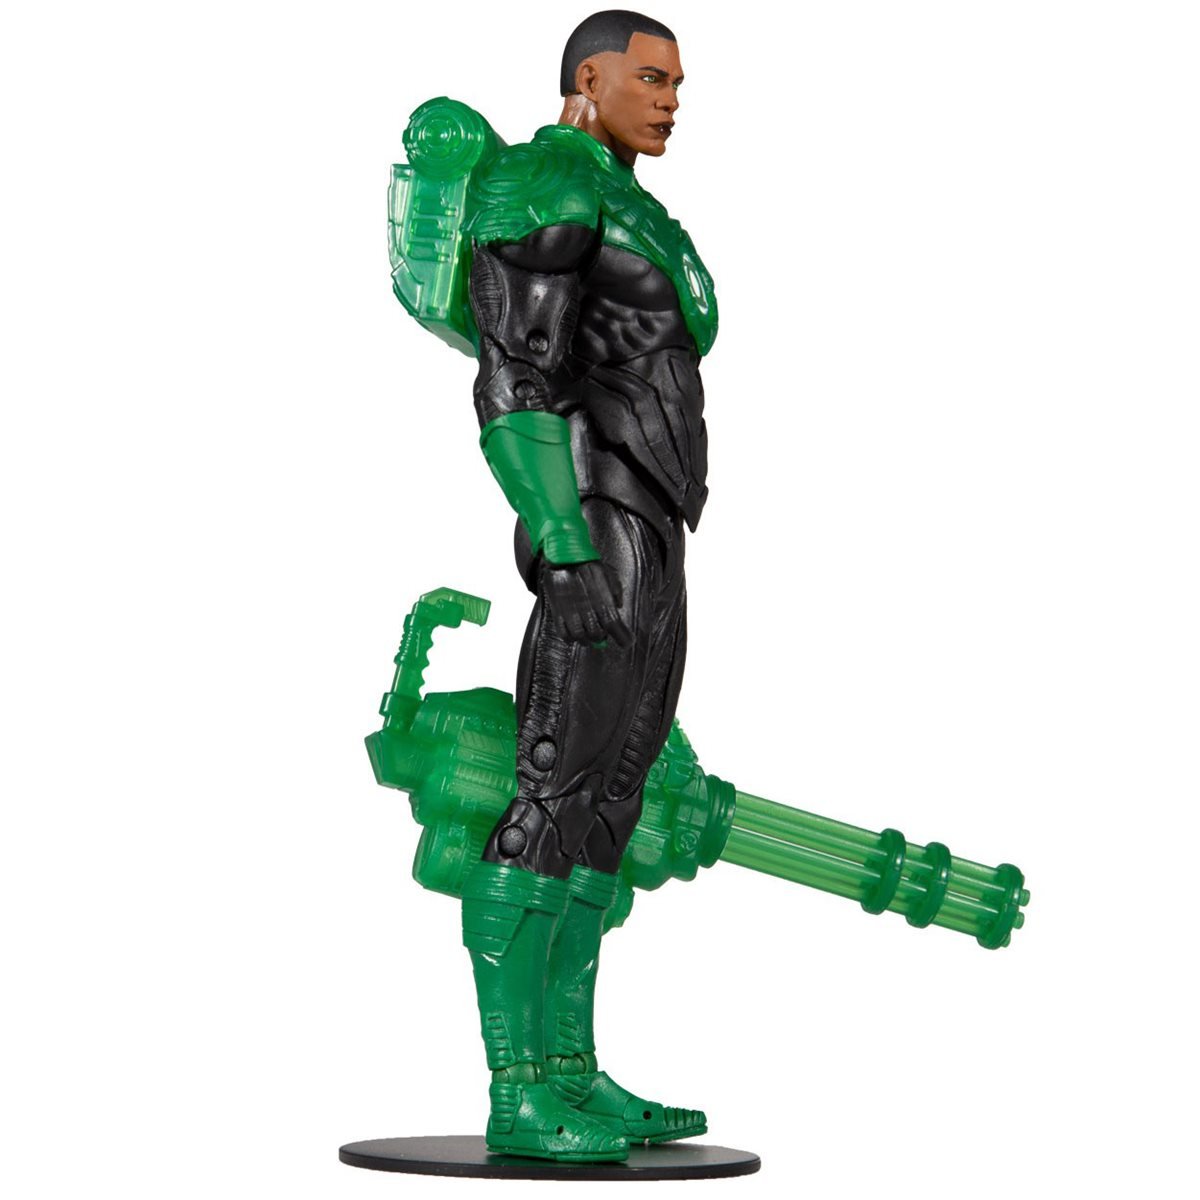 McFarlane Toys DC Multiverse Modern Comic Green Lantern John Stewart 7" Inch Action Figure for sale online 